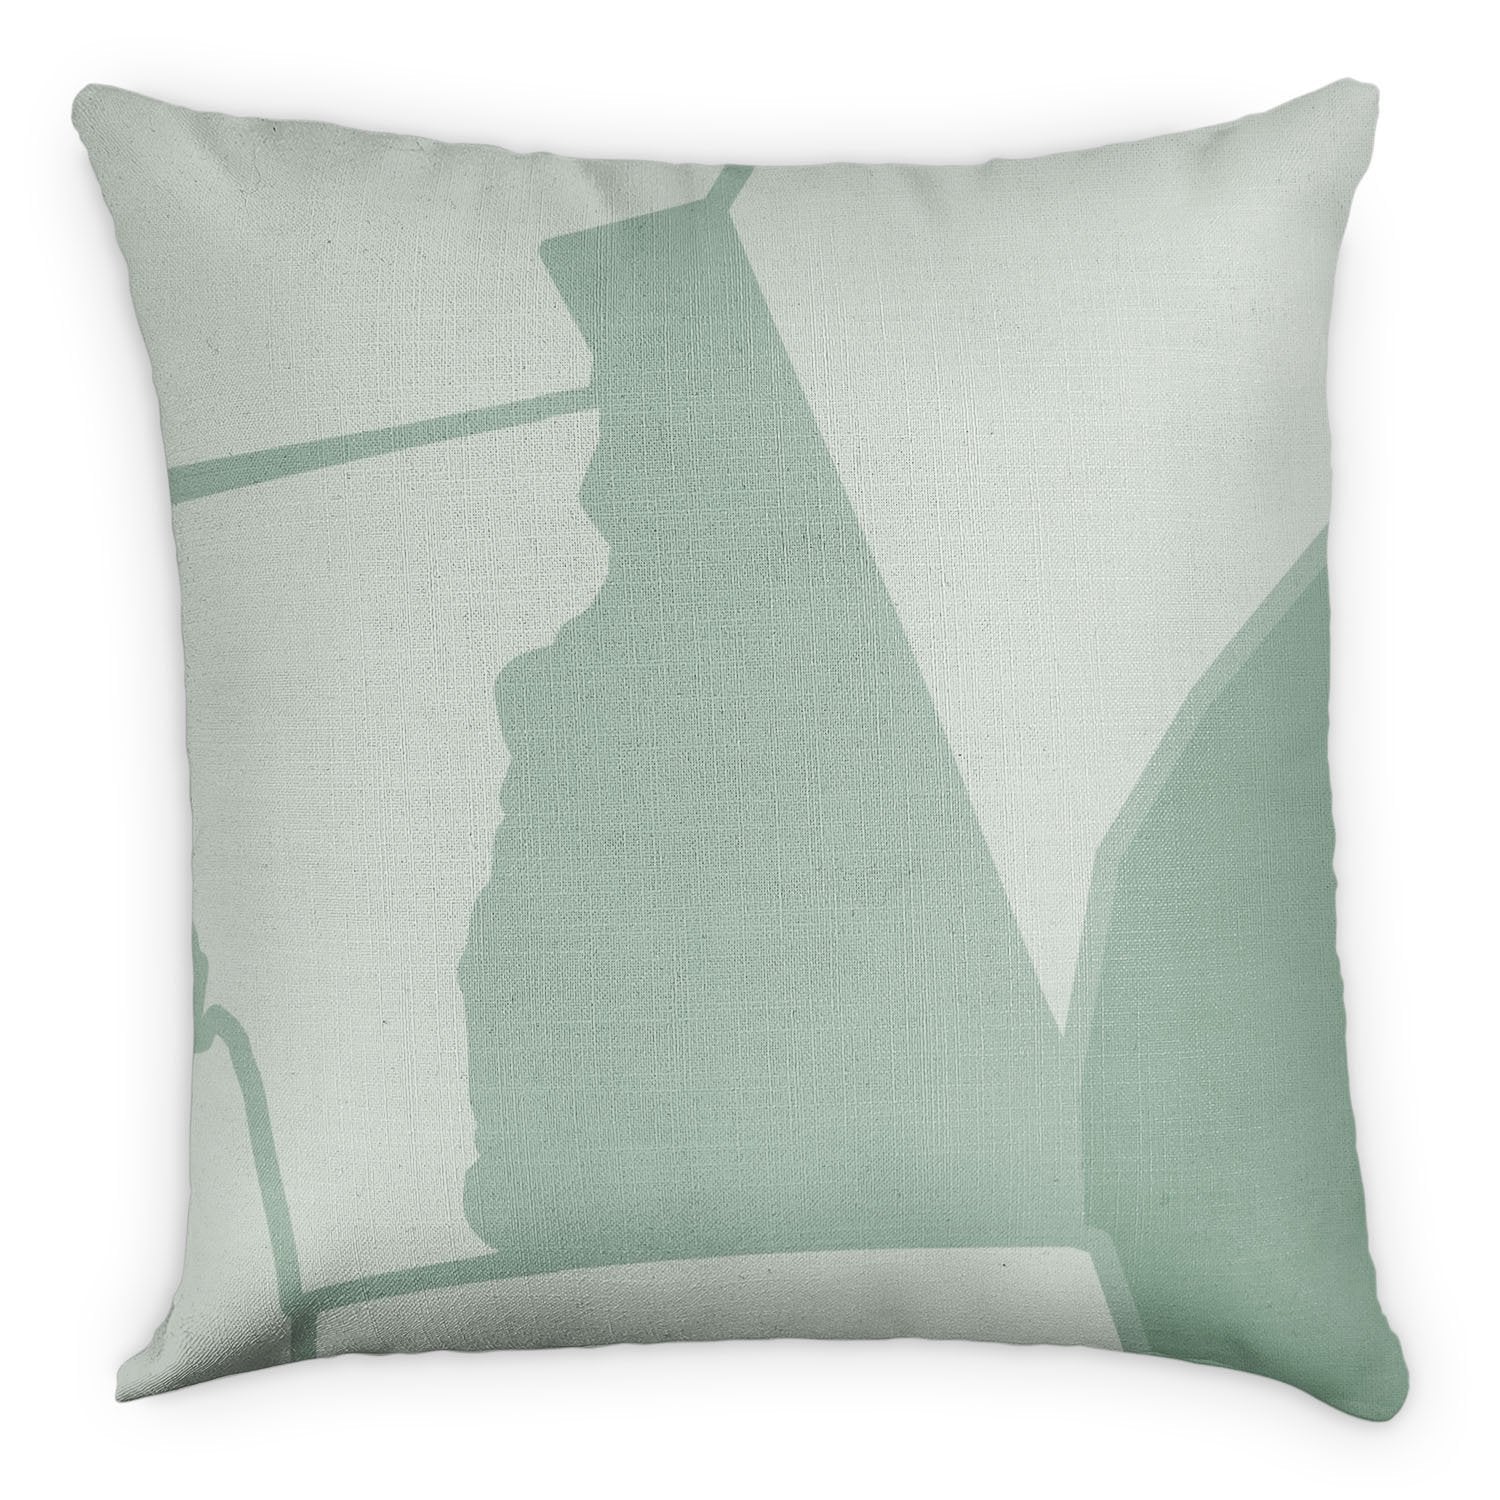 New Hampshire Square Pillow - Linen -  - Knotty Tie Co.